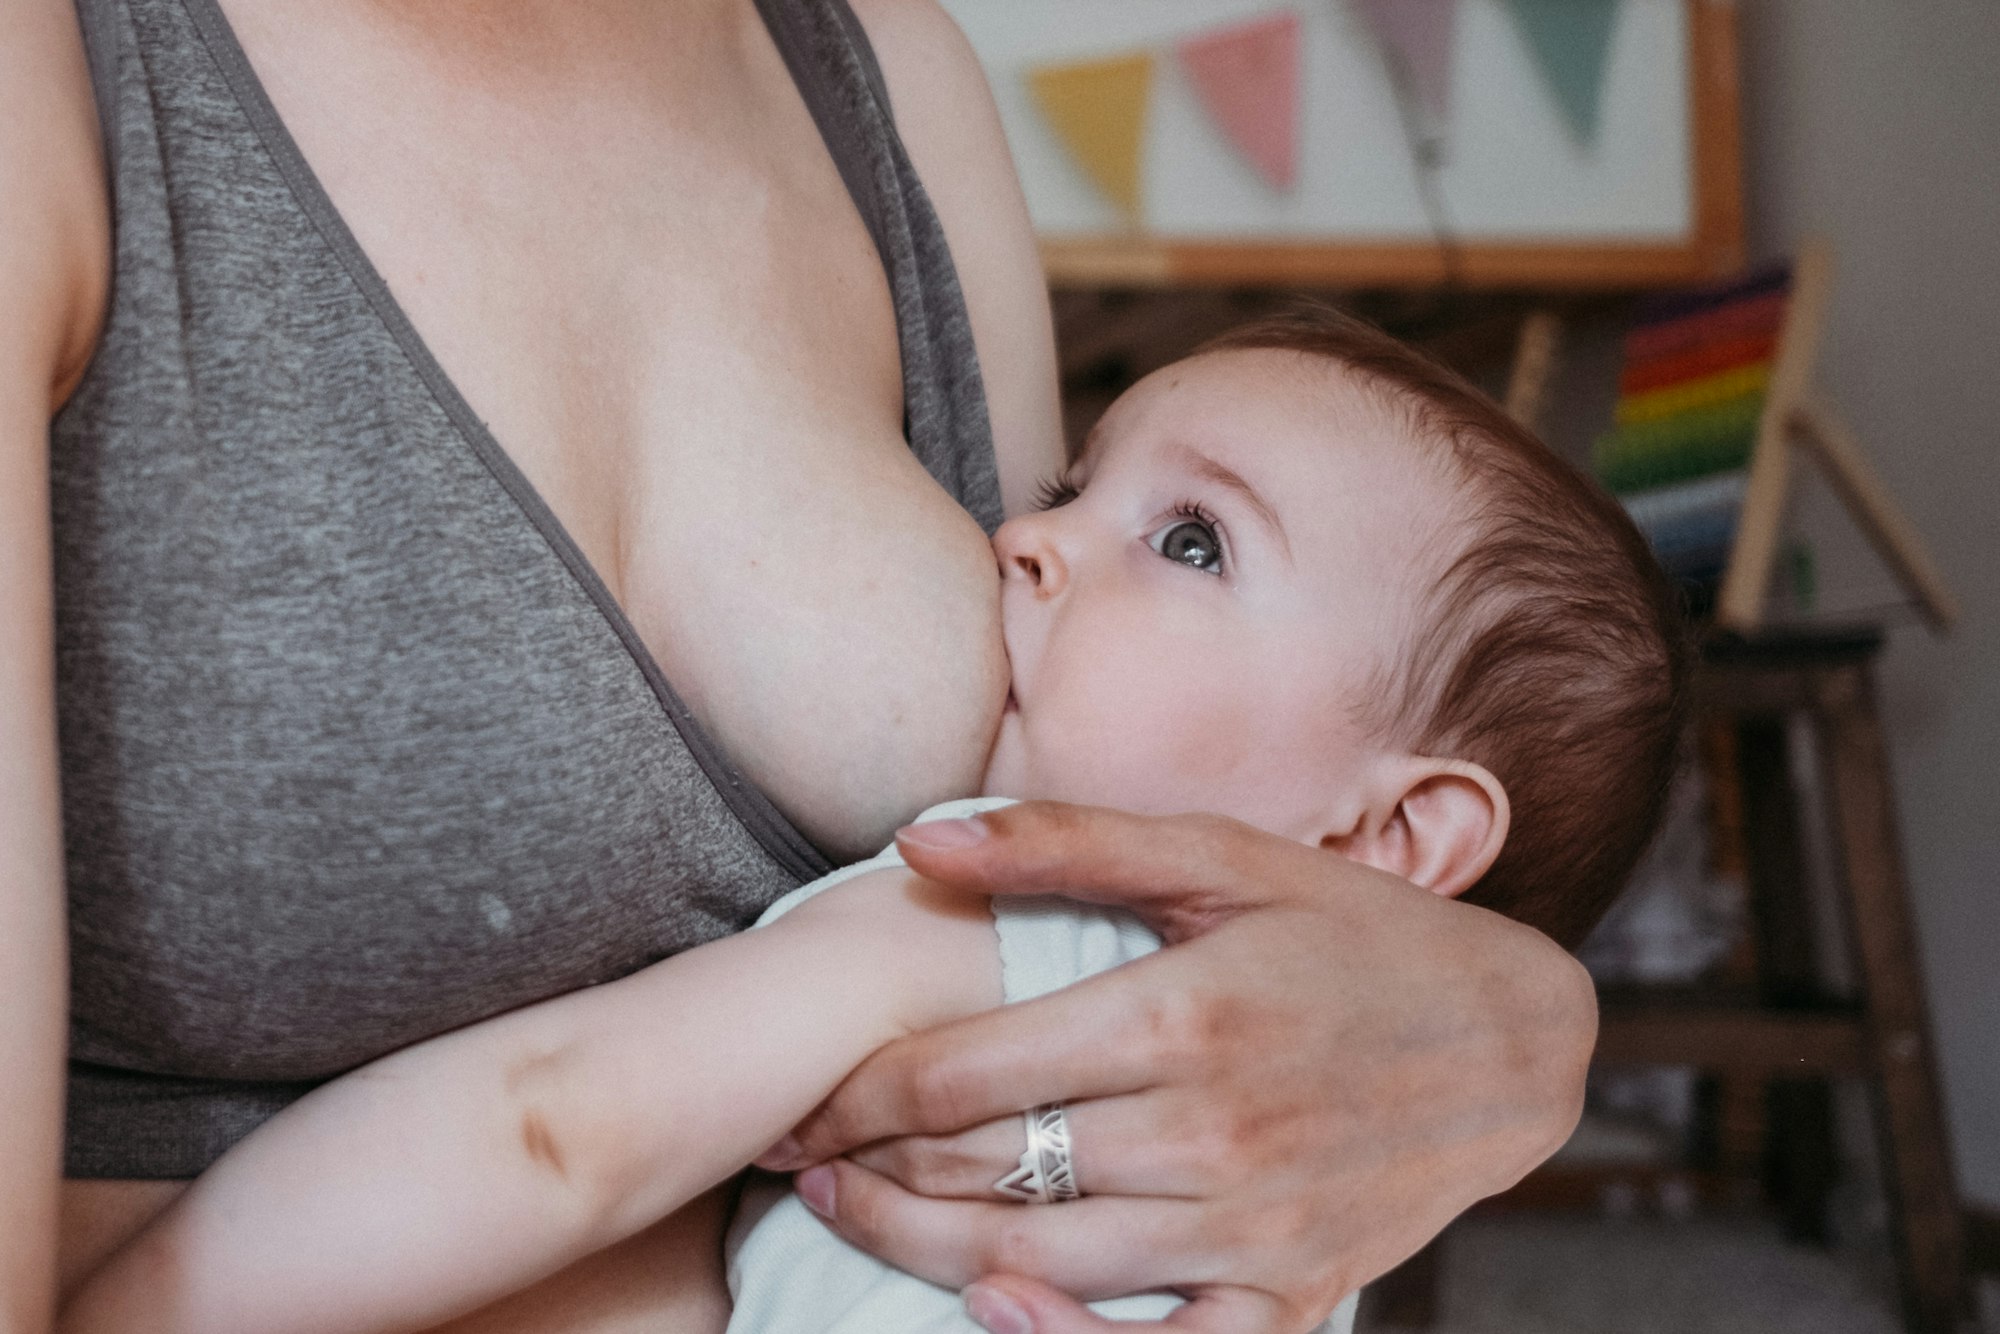 Woman breastfeeding her little baby